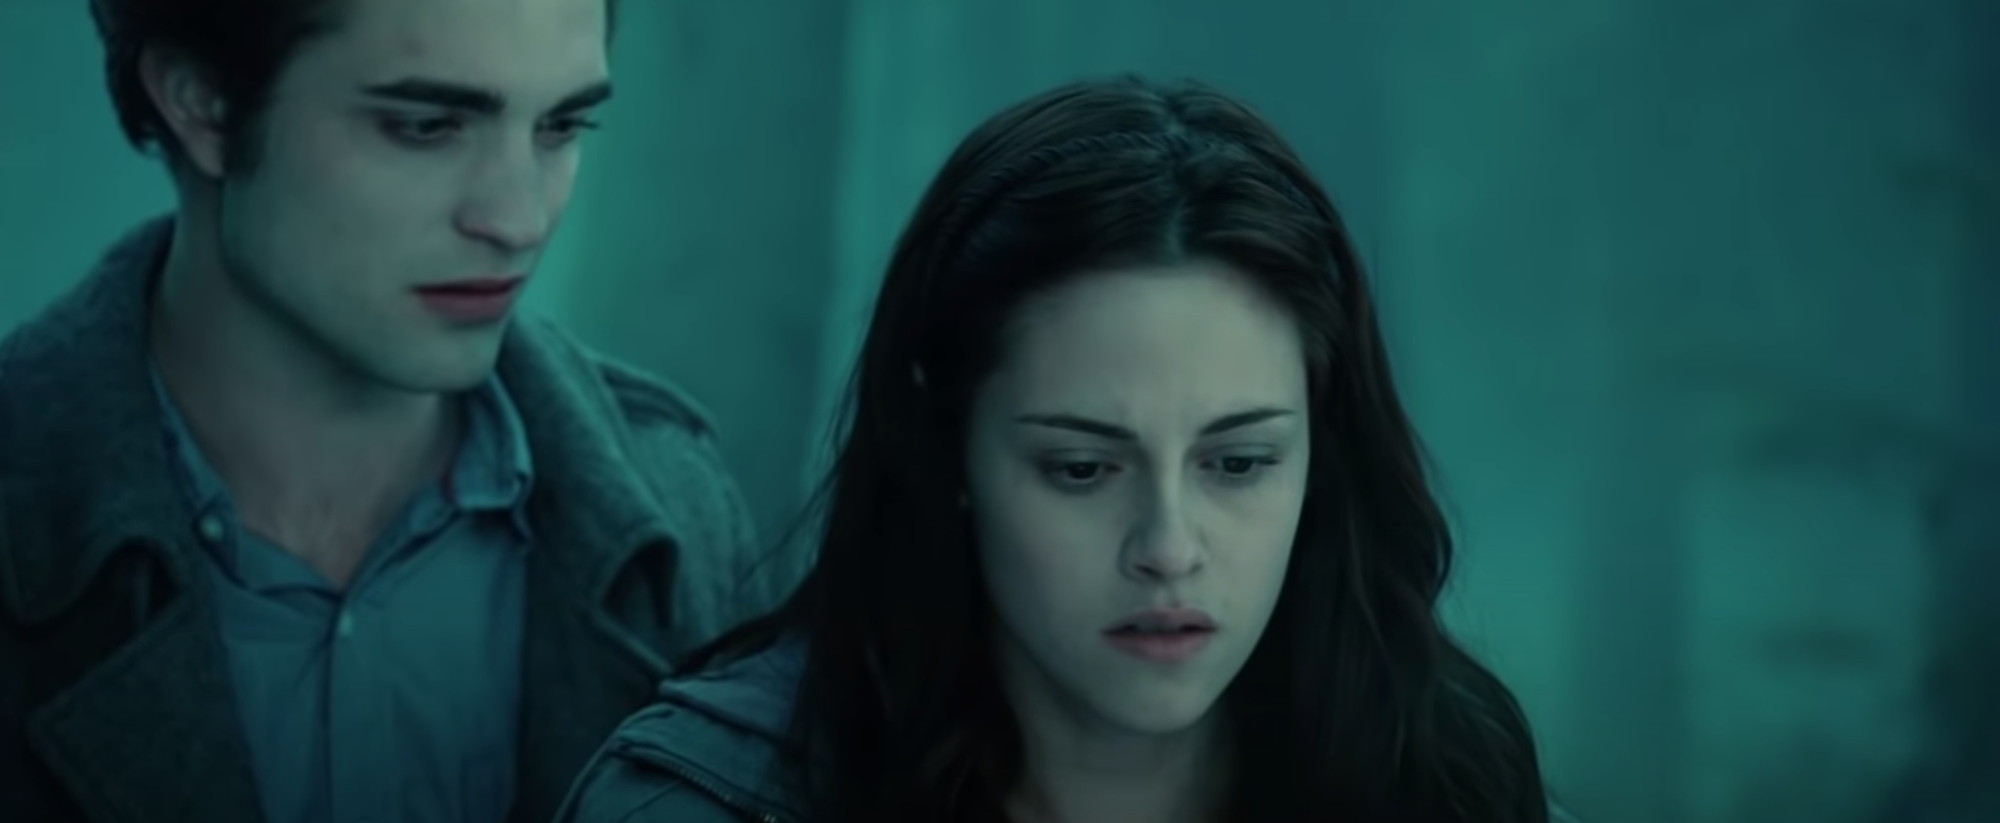 Edward Cullen (Robert Pattinson) and Bella Swan (Kristen Stewart) in the woods in 'Twilight'